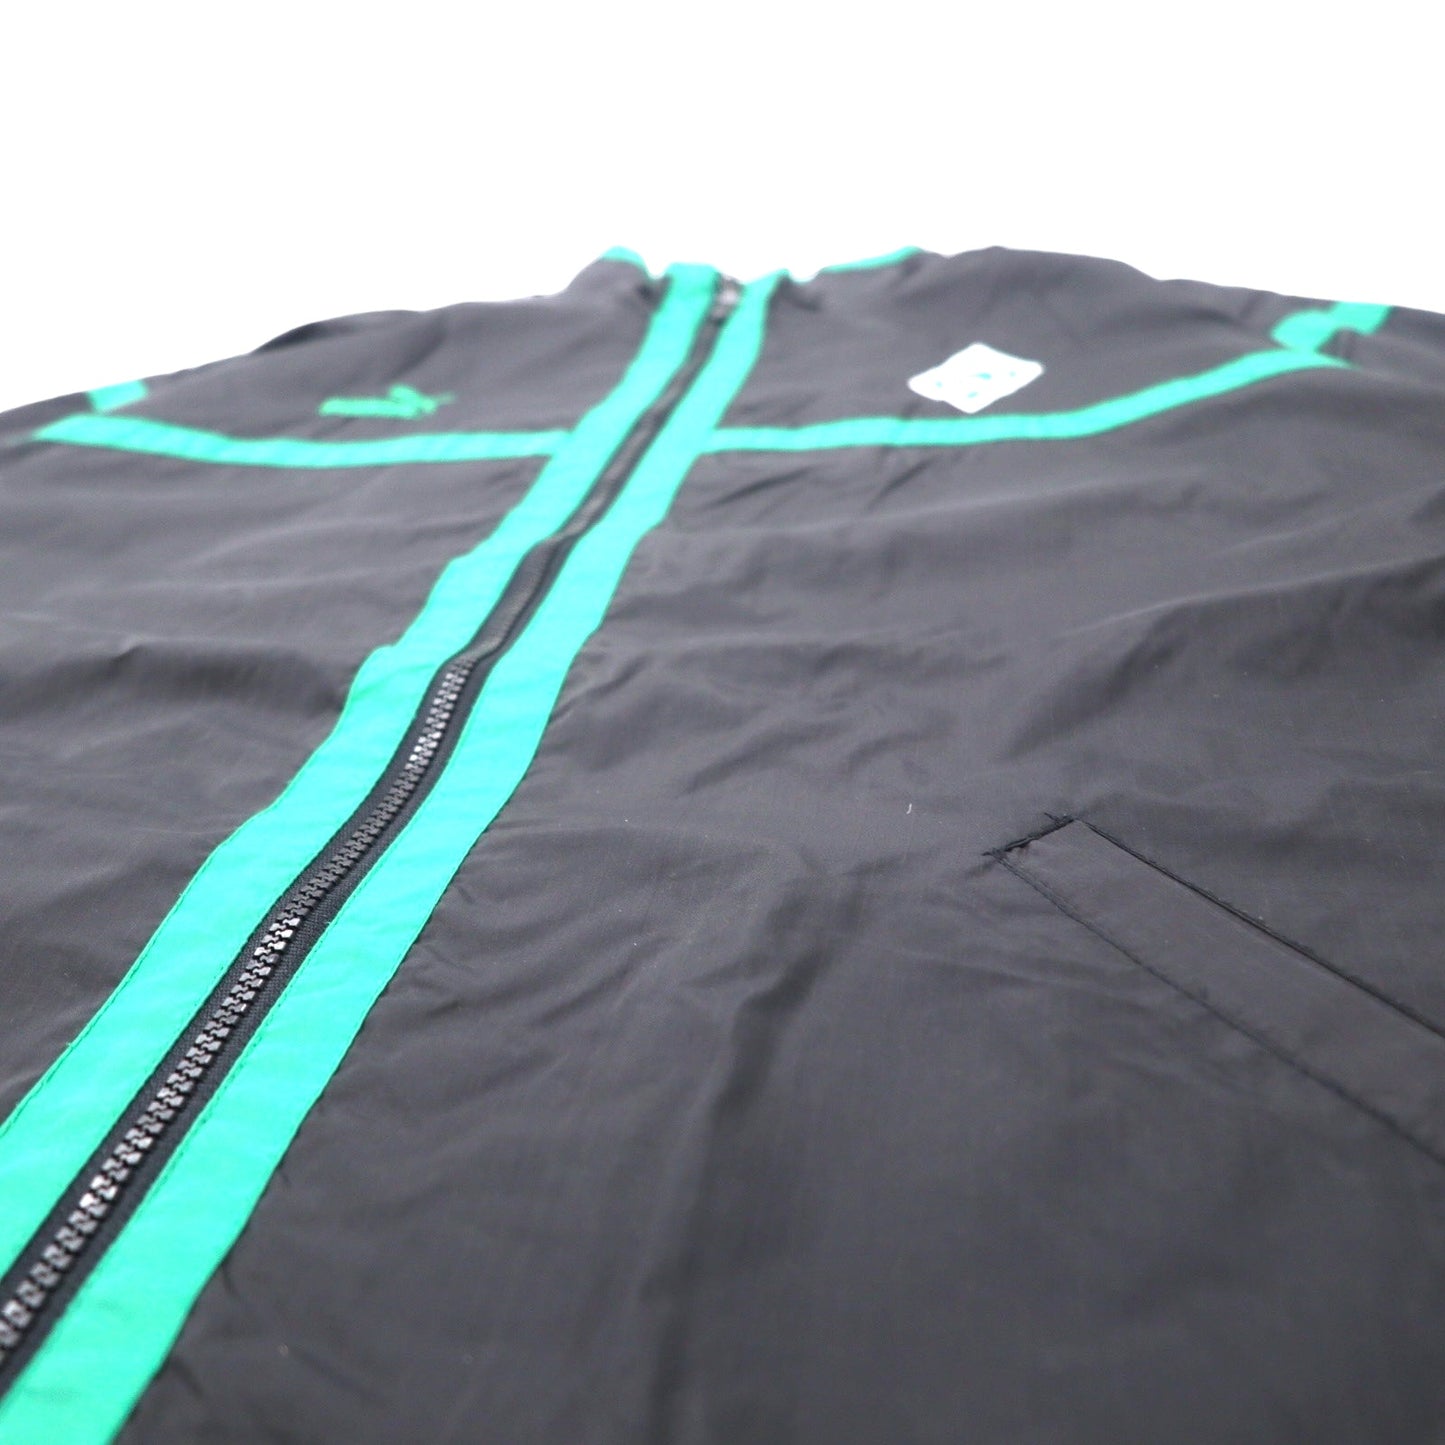 PUMA 90年代 ナイロンジャケット M ブラック グリーン ポリエステル ワンポイント刺繍 ビッグサイズ